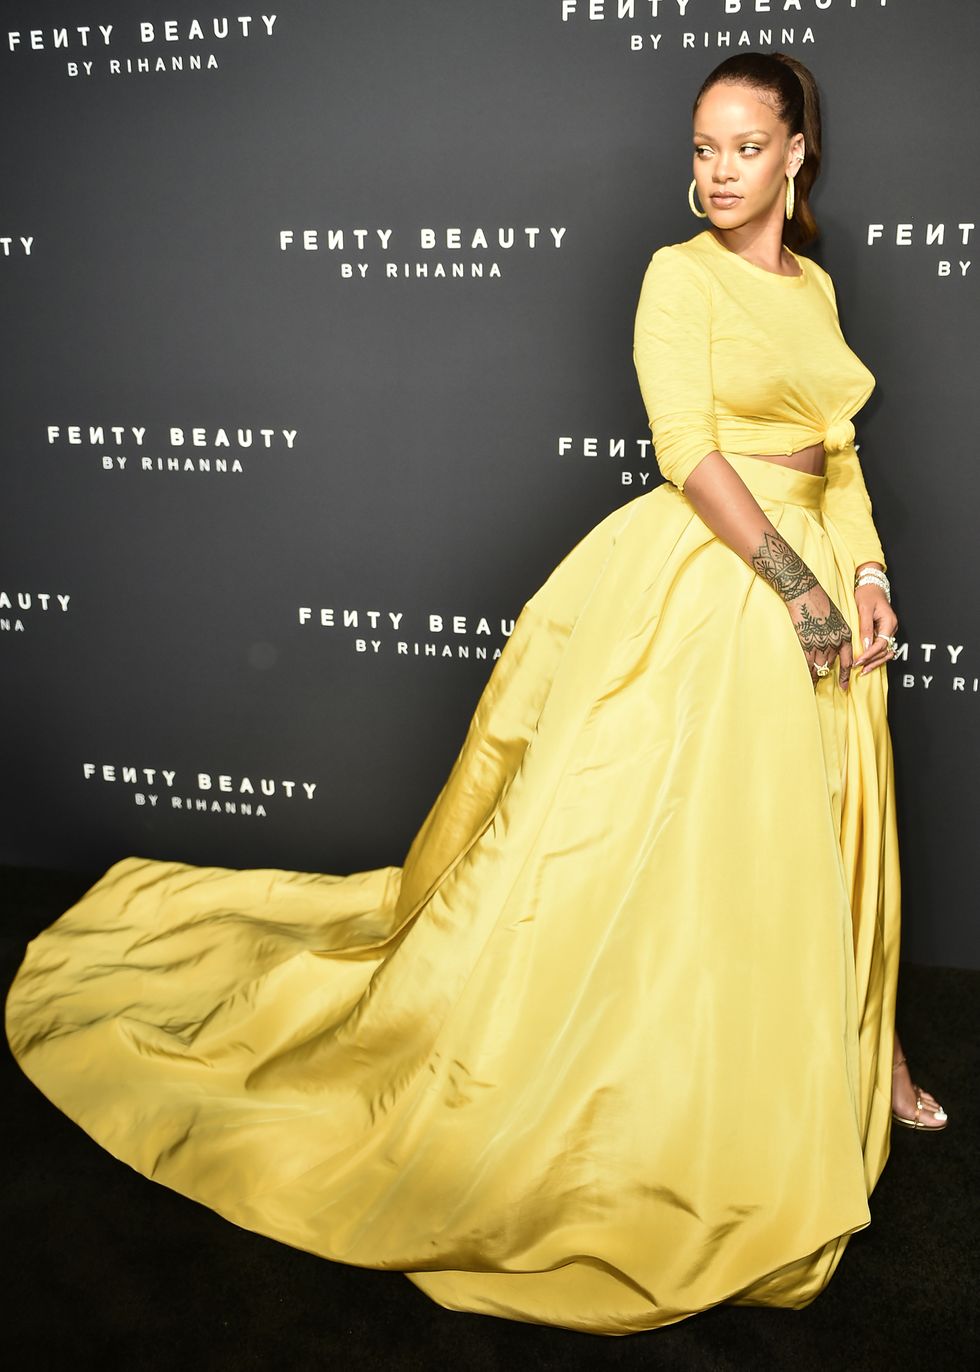 Rihanna in yellow dress at Fenty Beauty launch